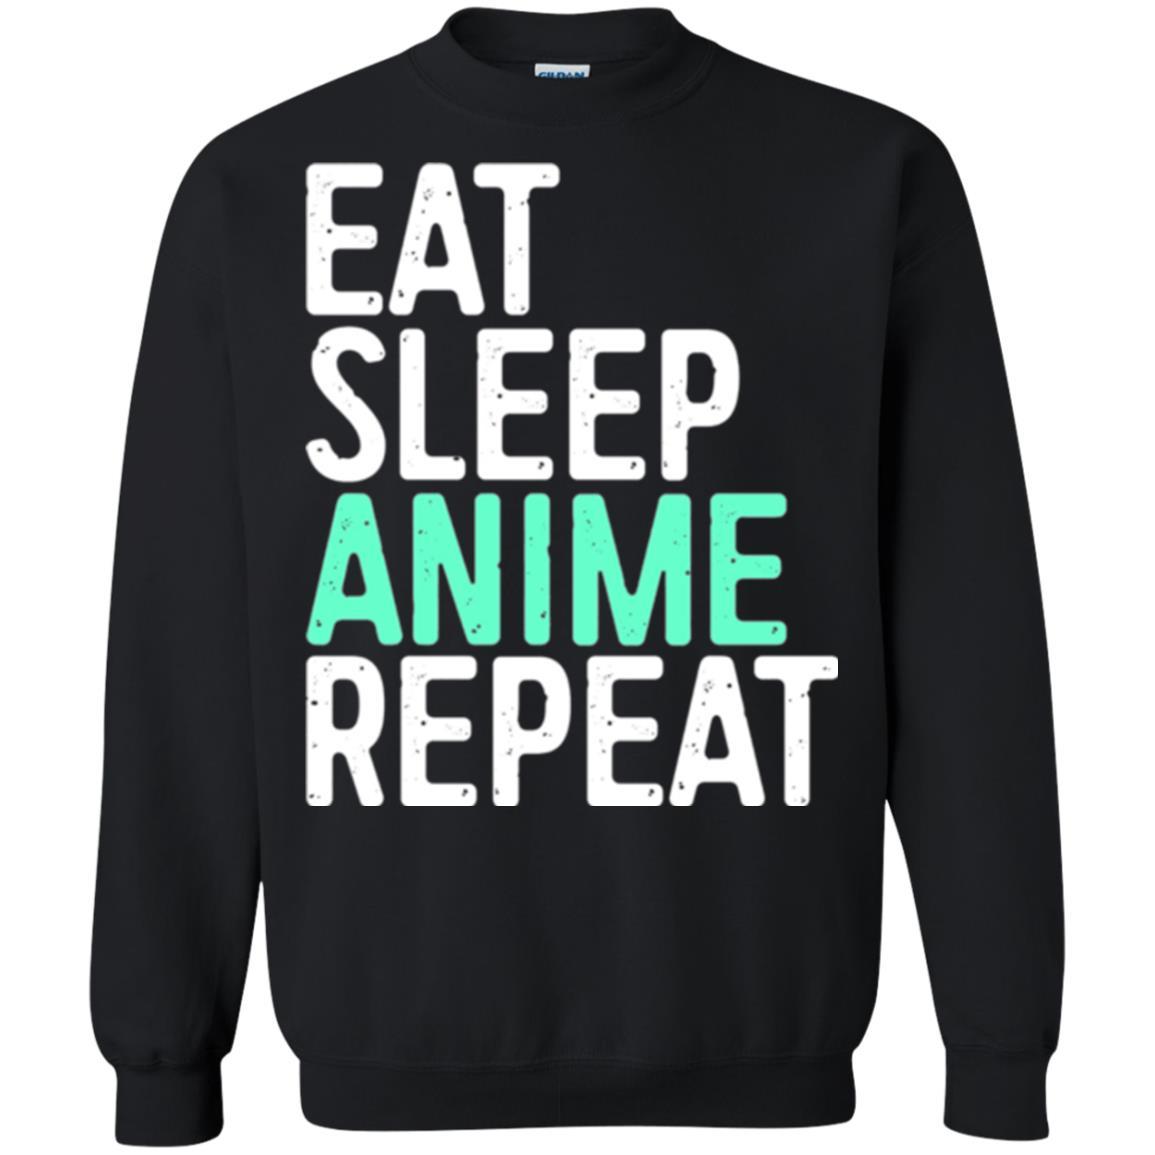 Japanese Animation Lover T-shirt Eat Sleep Anime Repeat